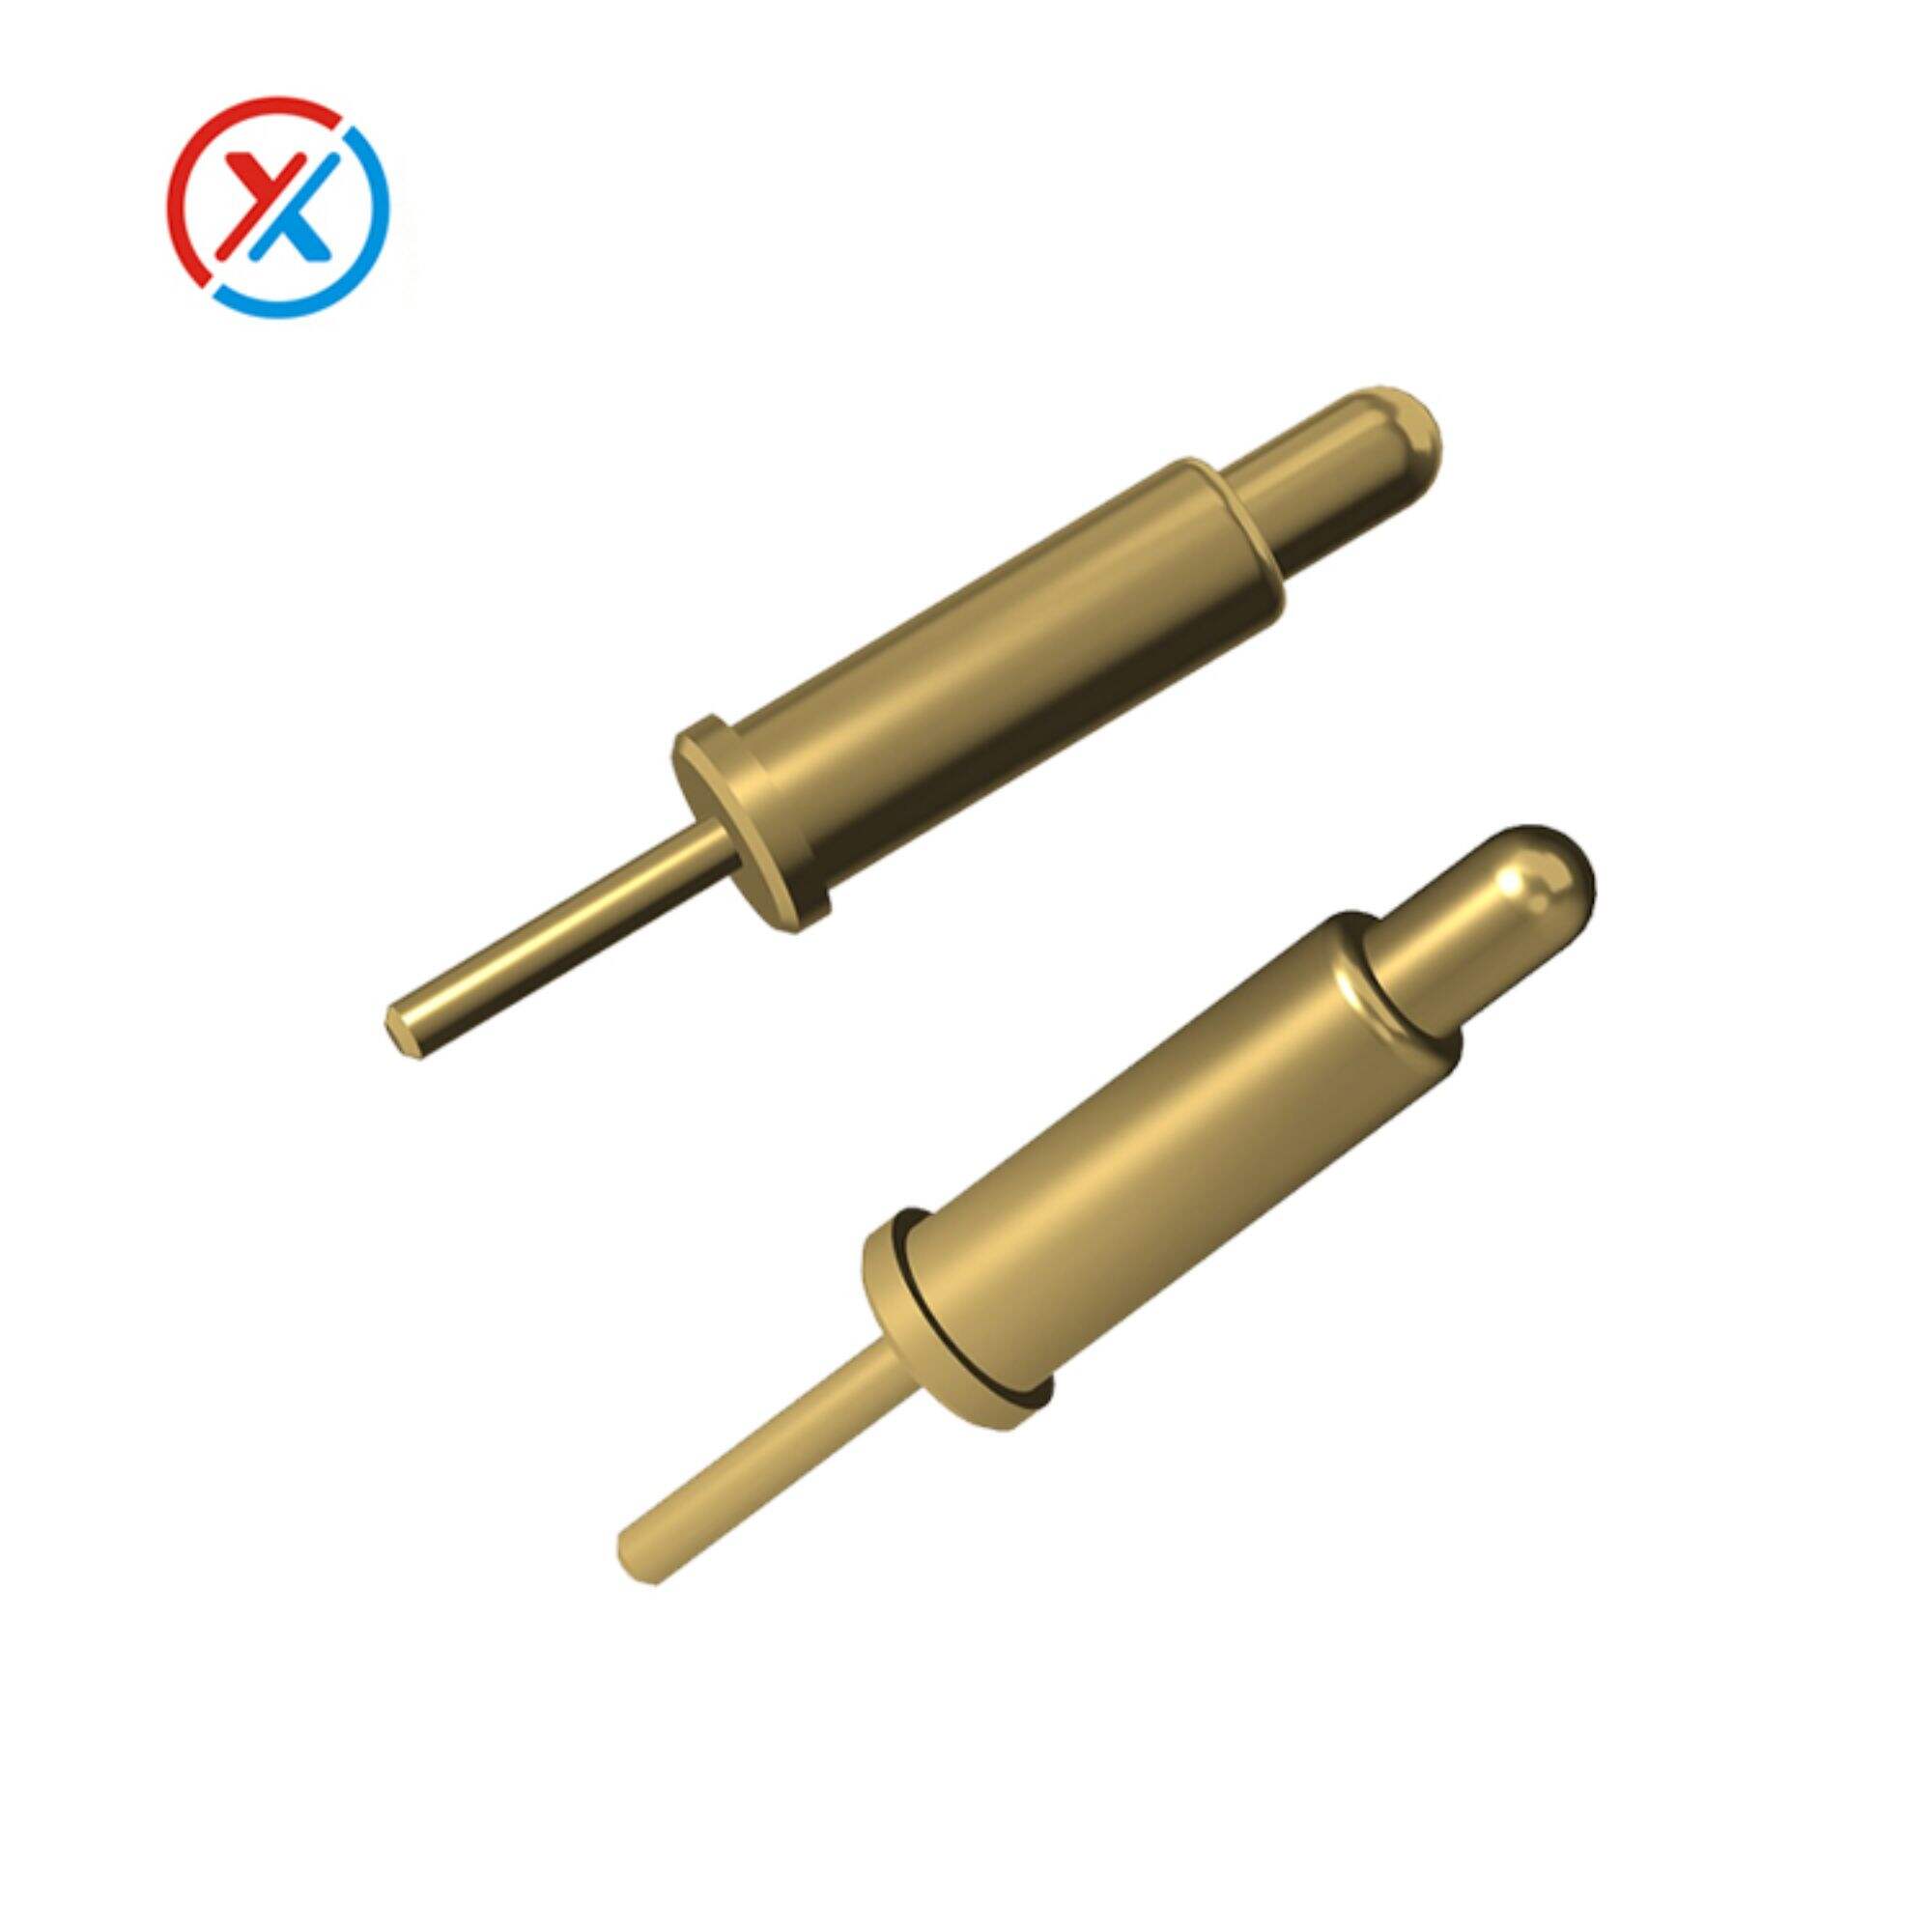 Non-standard pogopin spring needle Pogo pins Wire Bonding Type